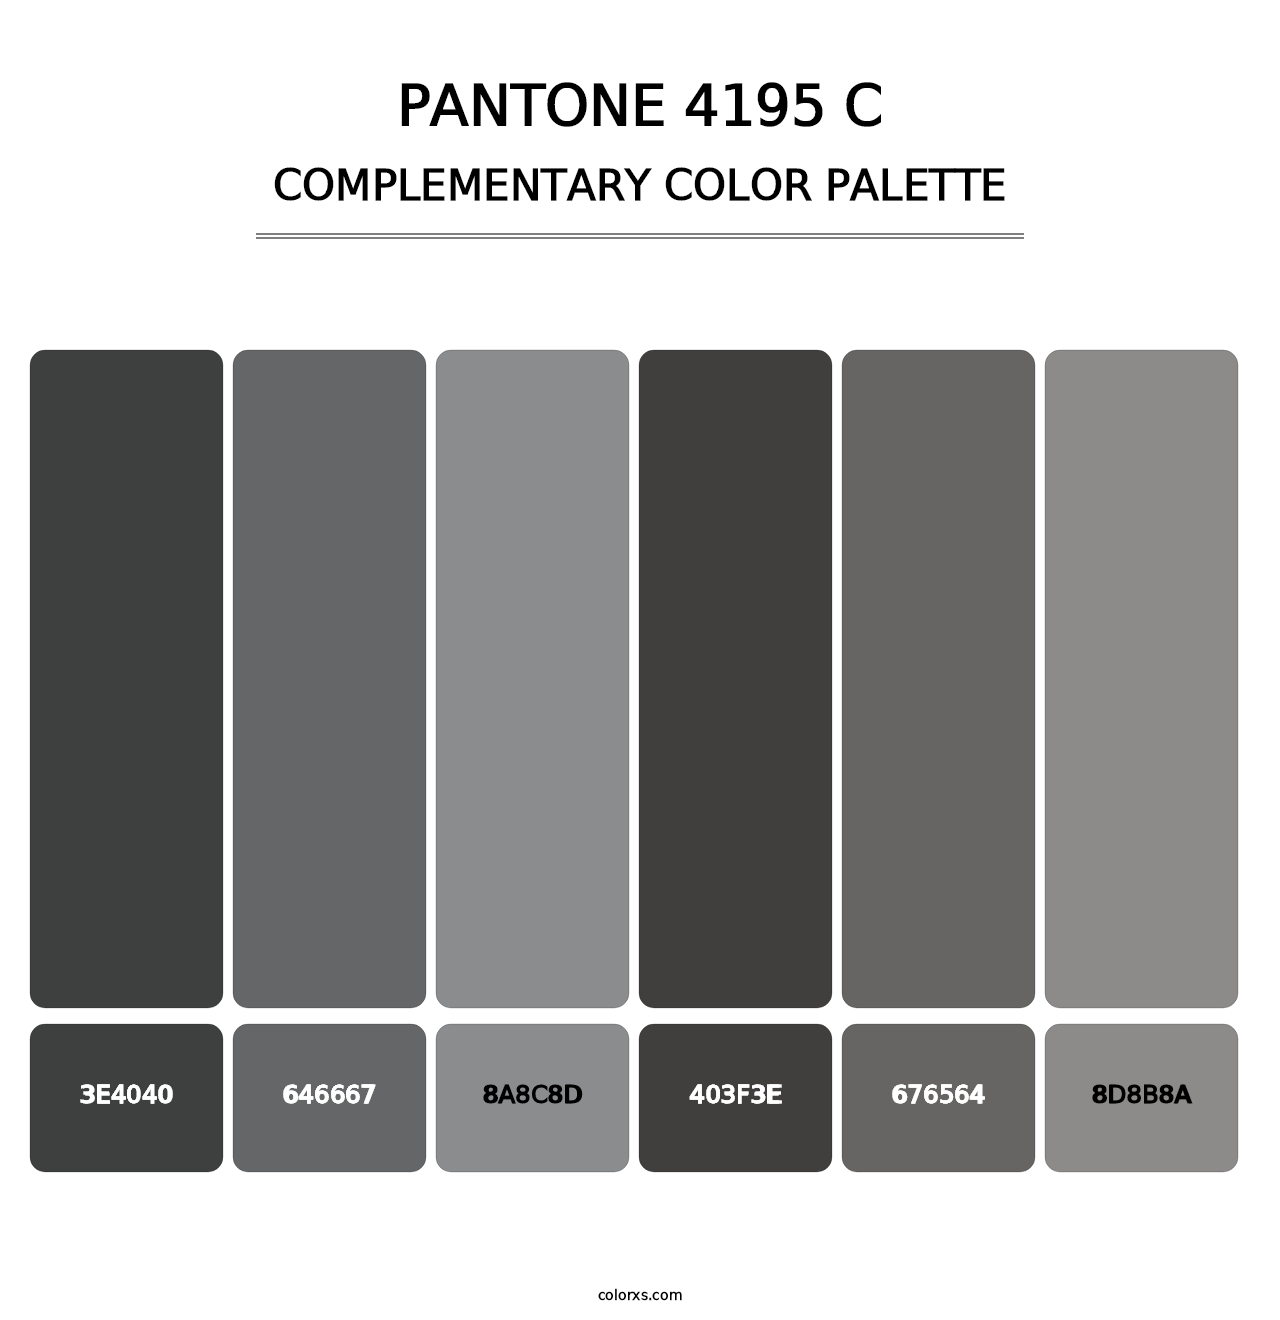 PANTONE 4195 C - Complementary Color Palette